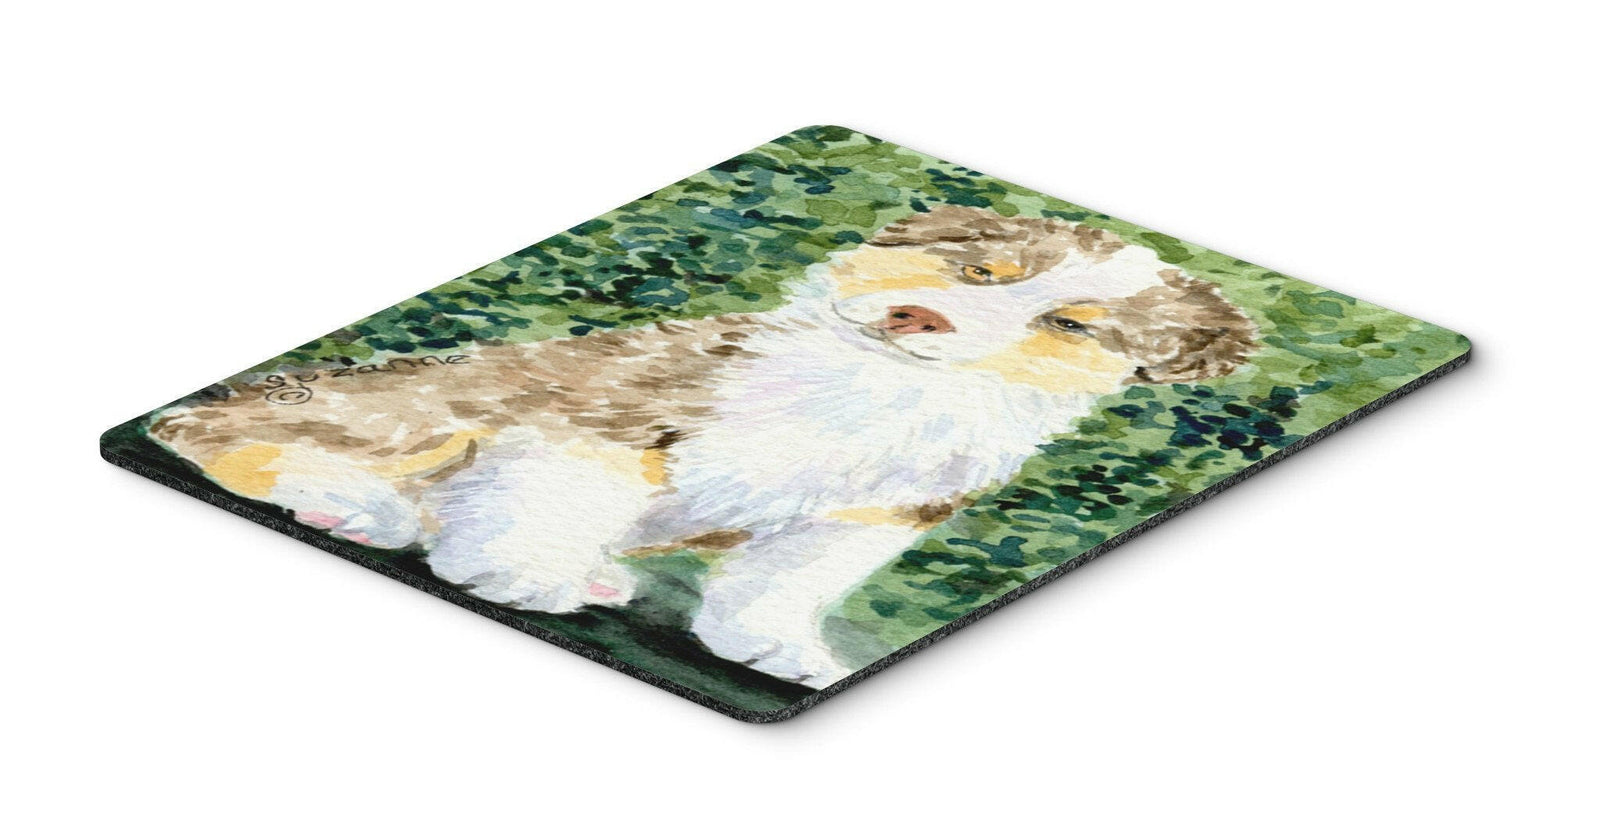 Australian Shepherd Mouse Pad / Hot Pad / Trivet by Caroline's Treasures